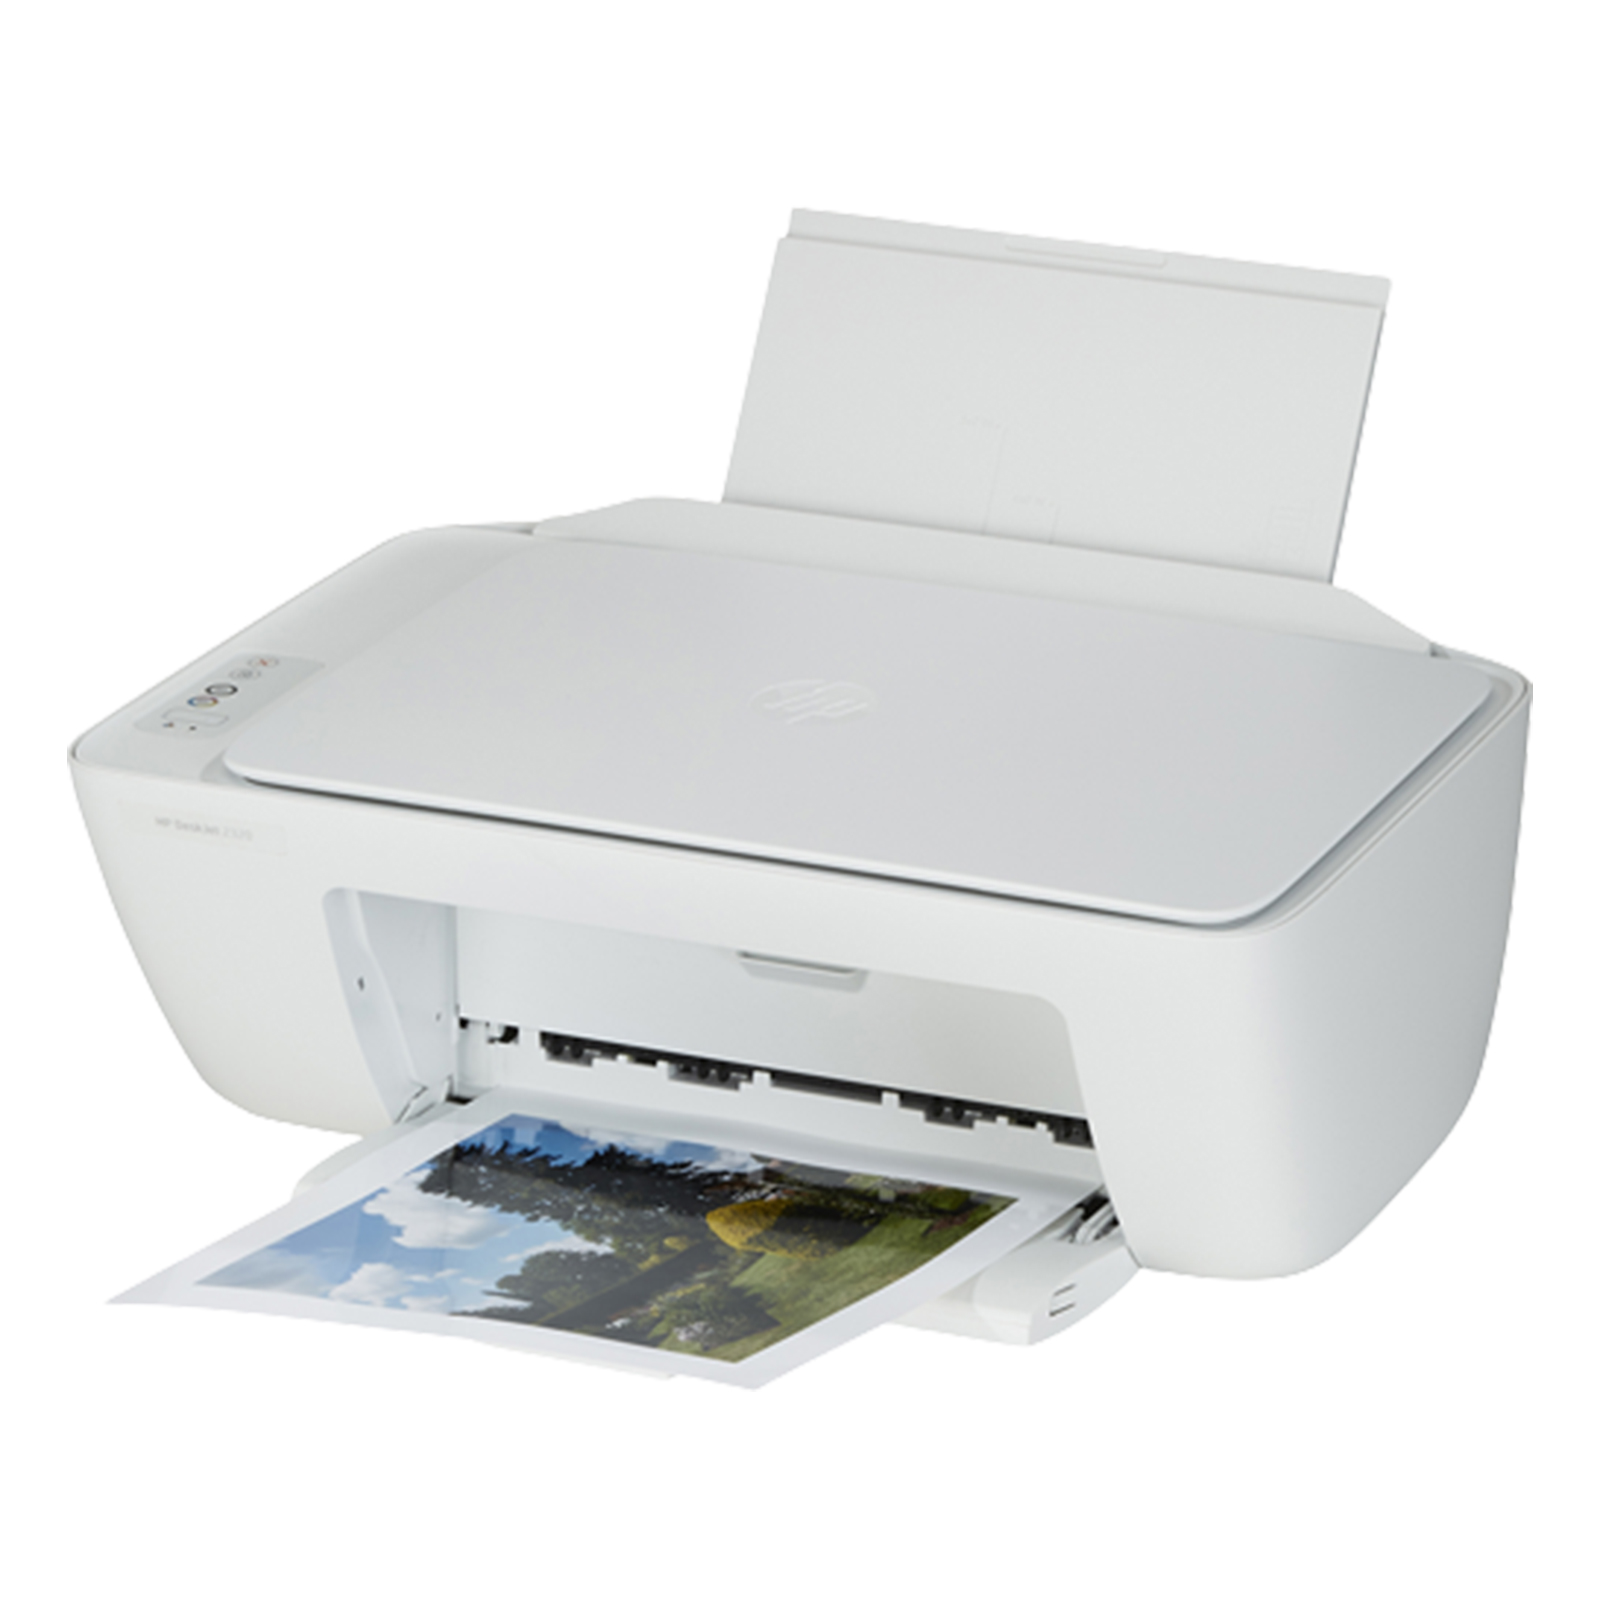 Imprimante Multifonction HP Deskjet 2320 (Blanc) - 7WN42B - Cyber